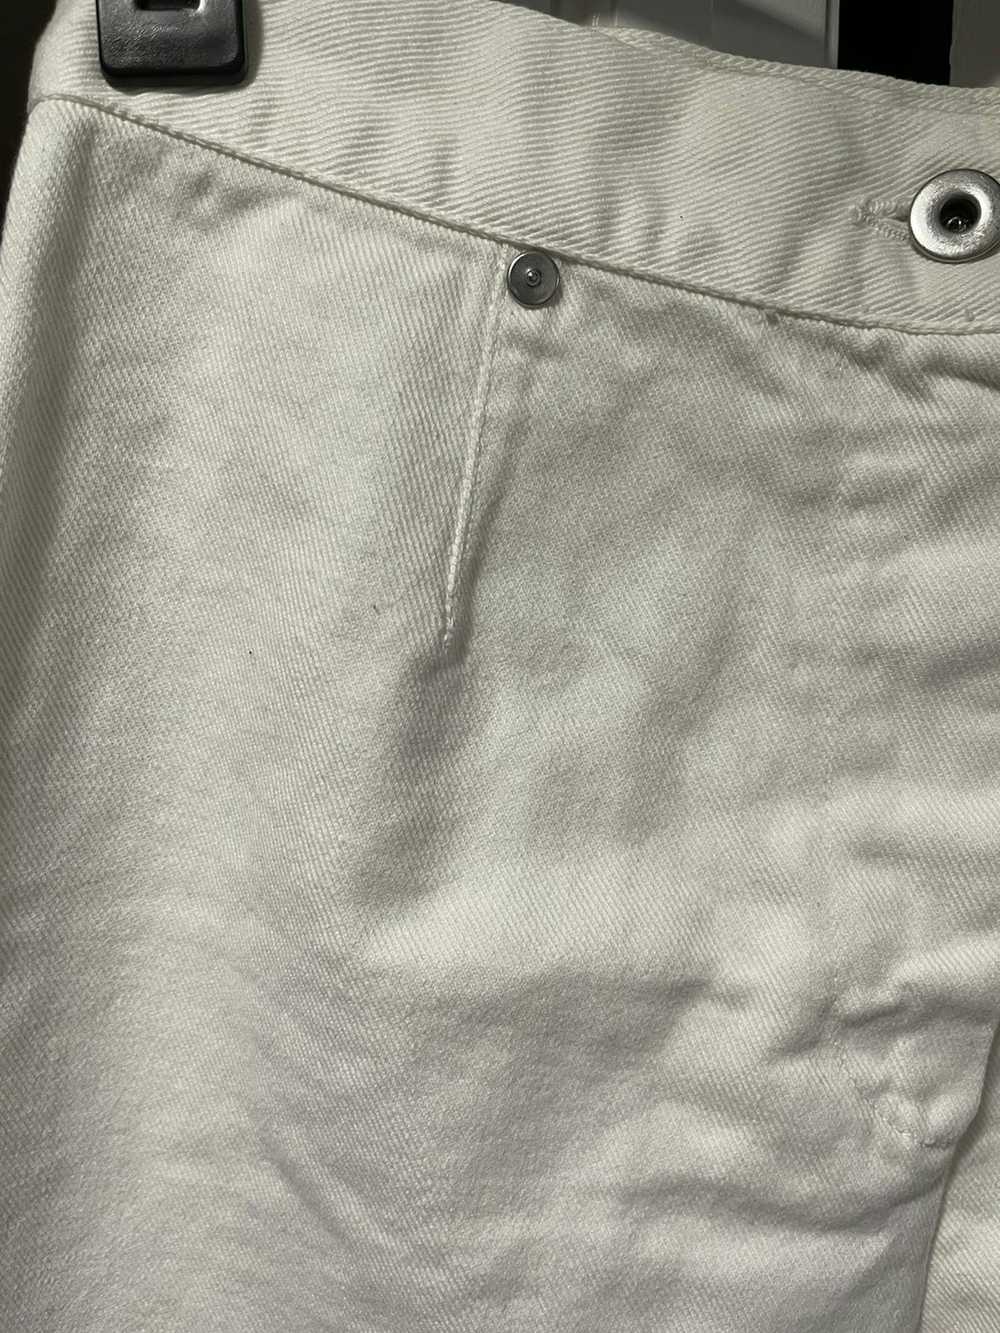 Miu Miu Vintage wide leg no pocket jeans - image 3